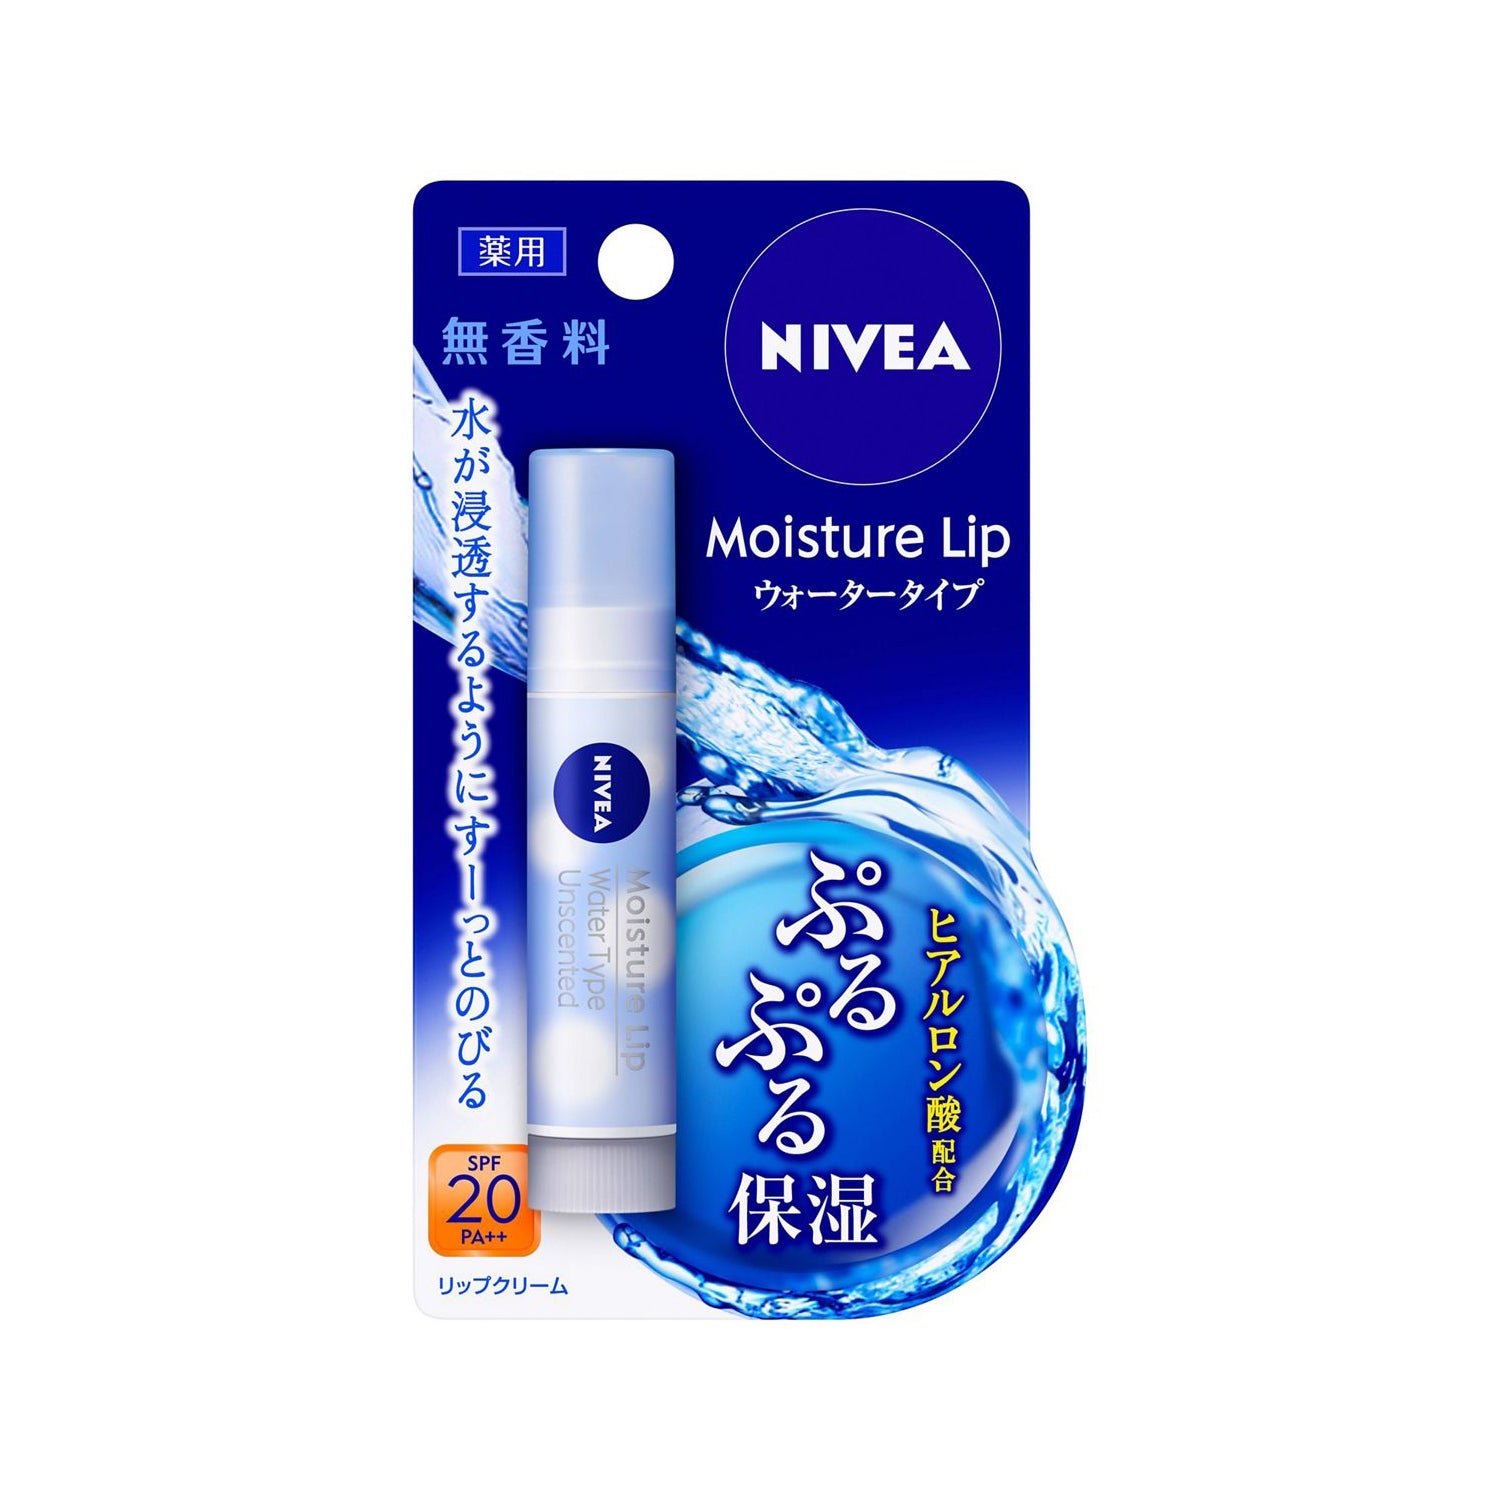 Nivea Moisture Lip Water Type Balm Unscented Beauty Nivea Japan   